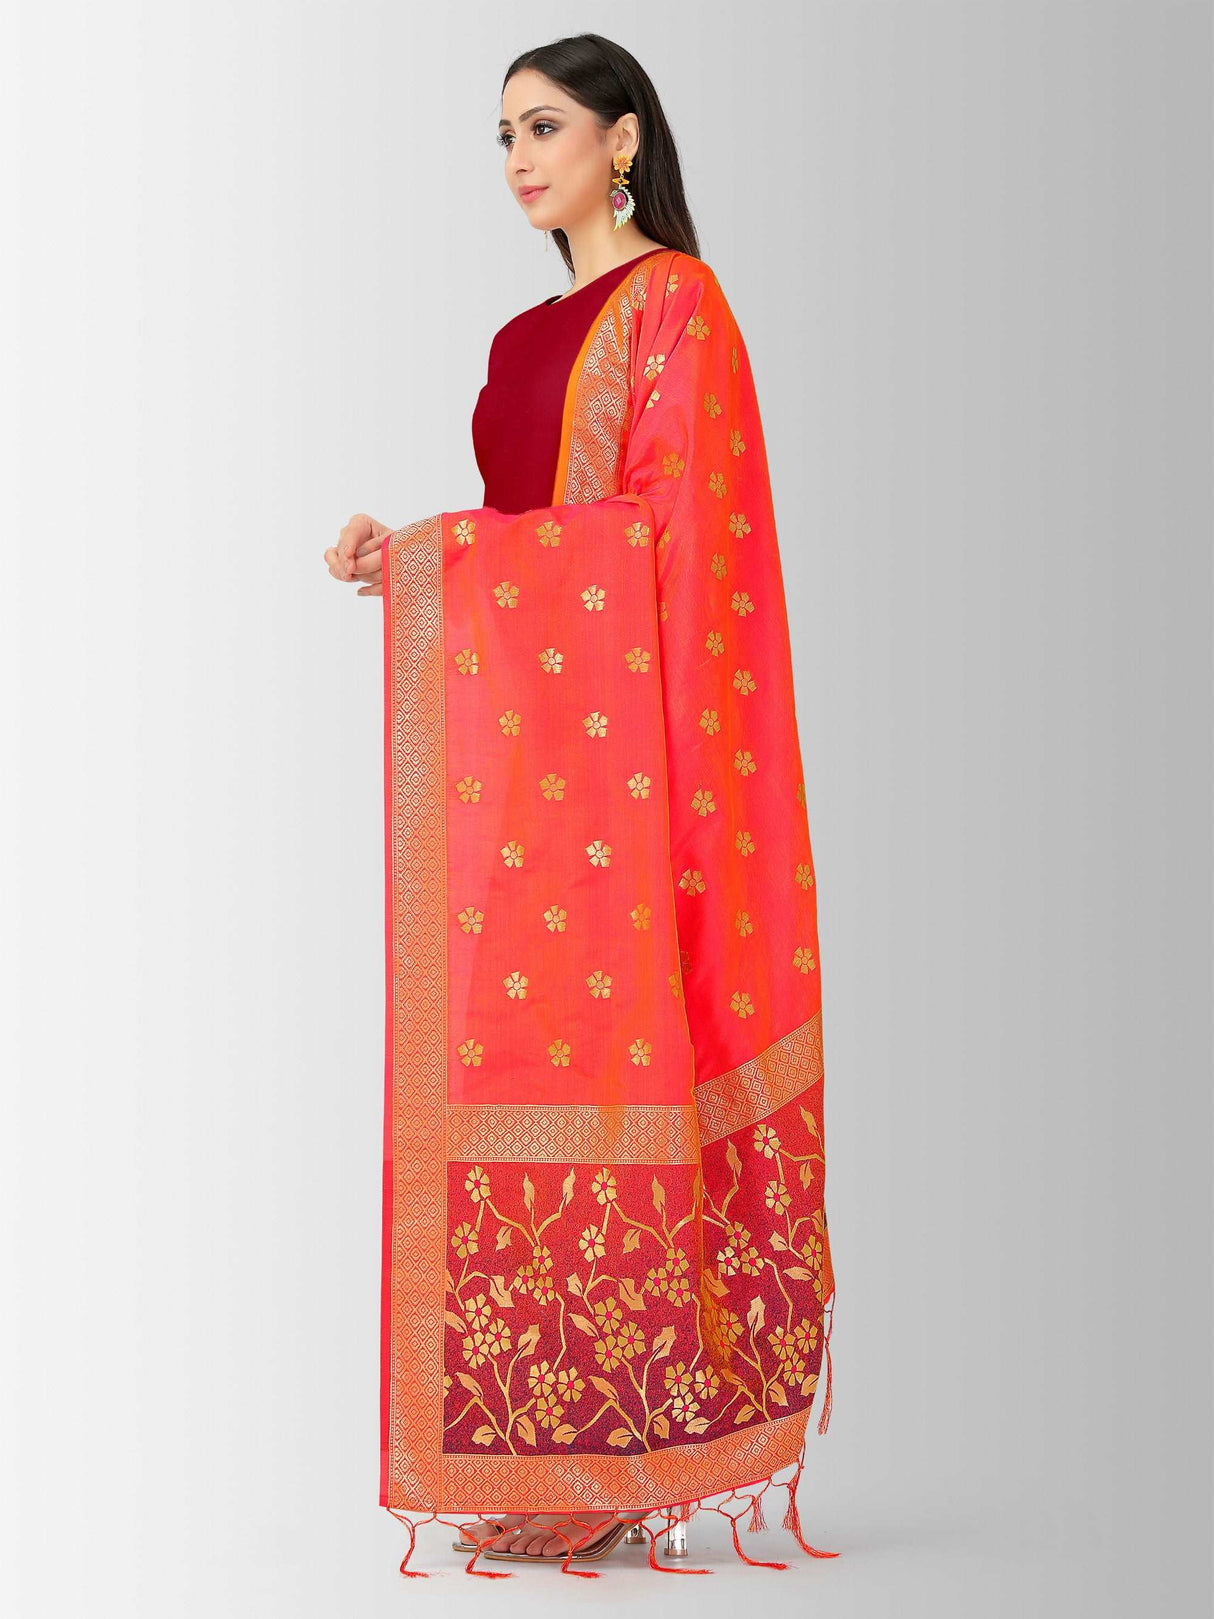 MIMOSA Women's Banarasi Art Silk dupatta Pink Color